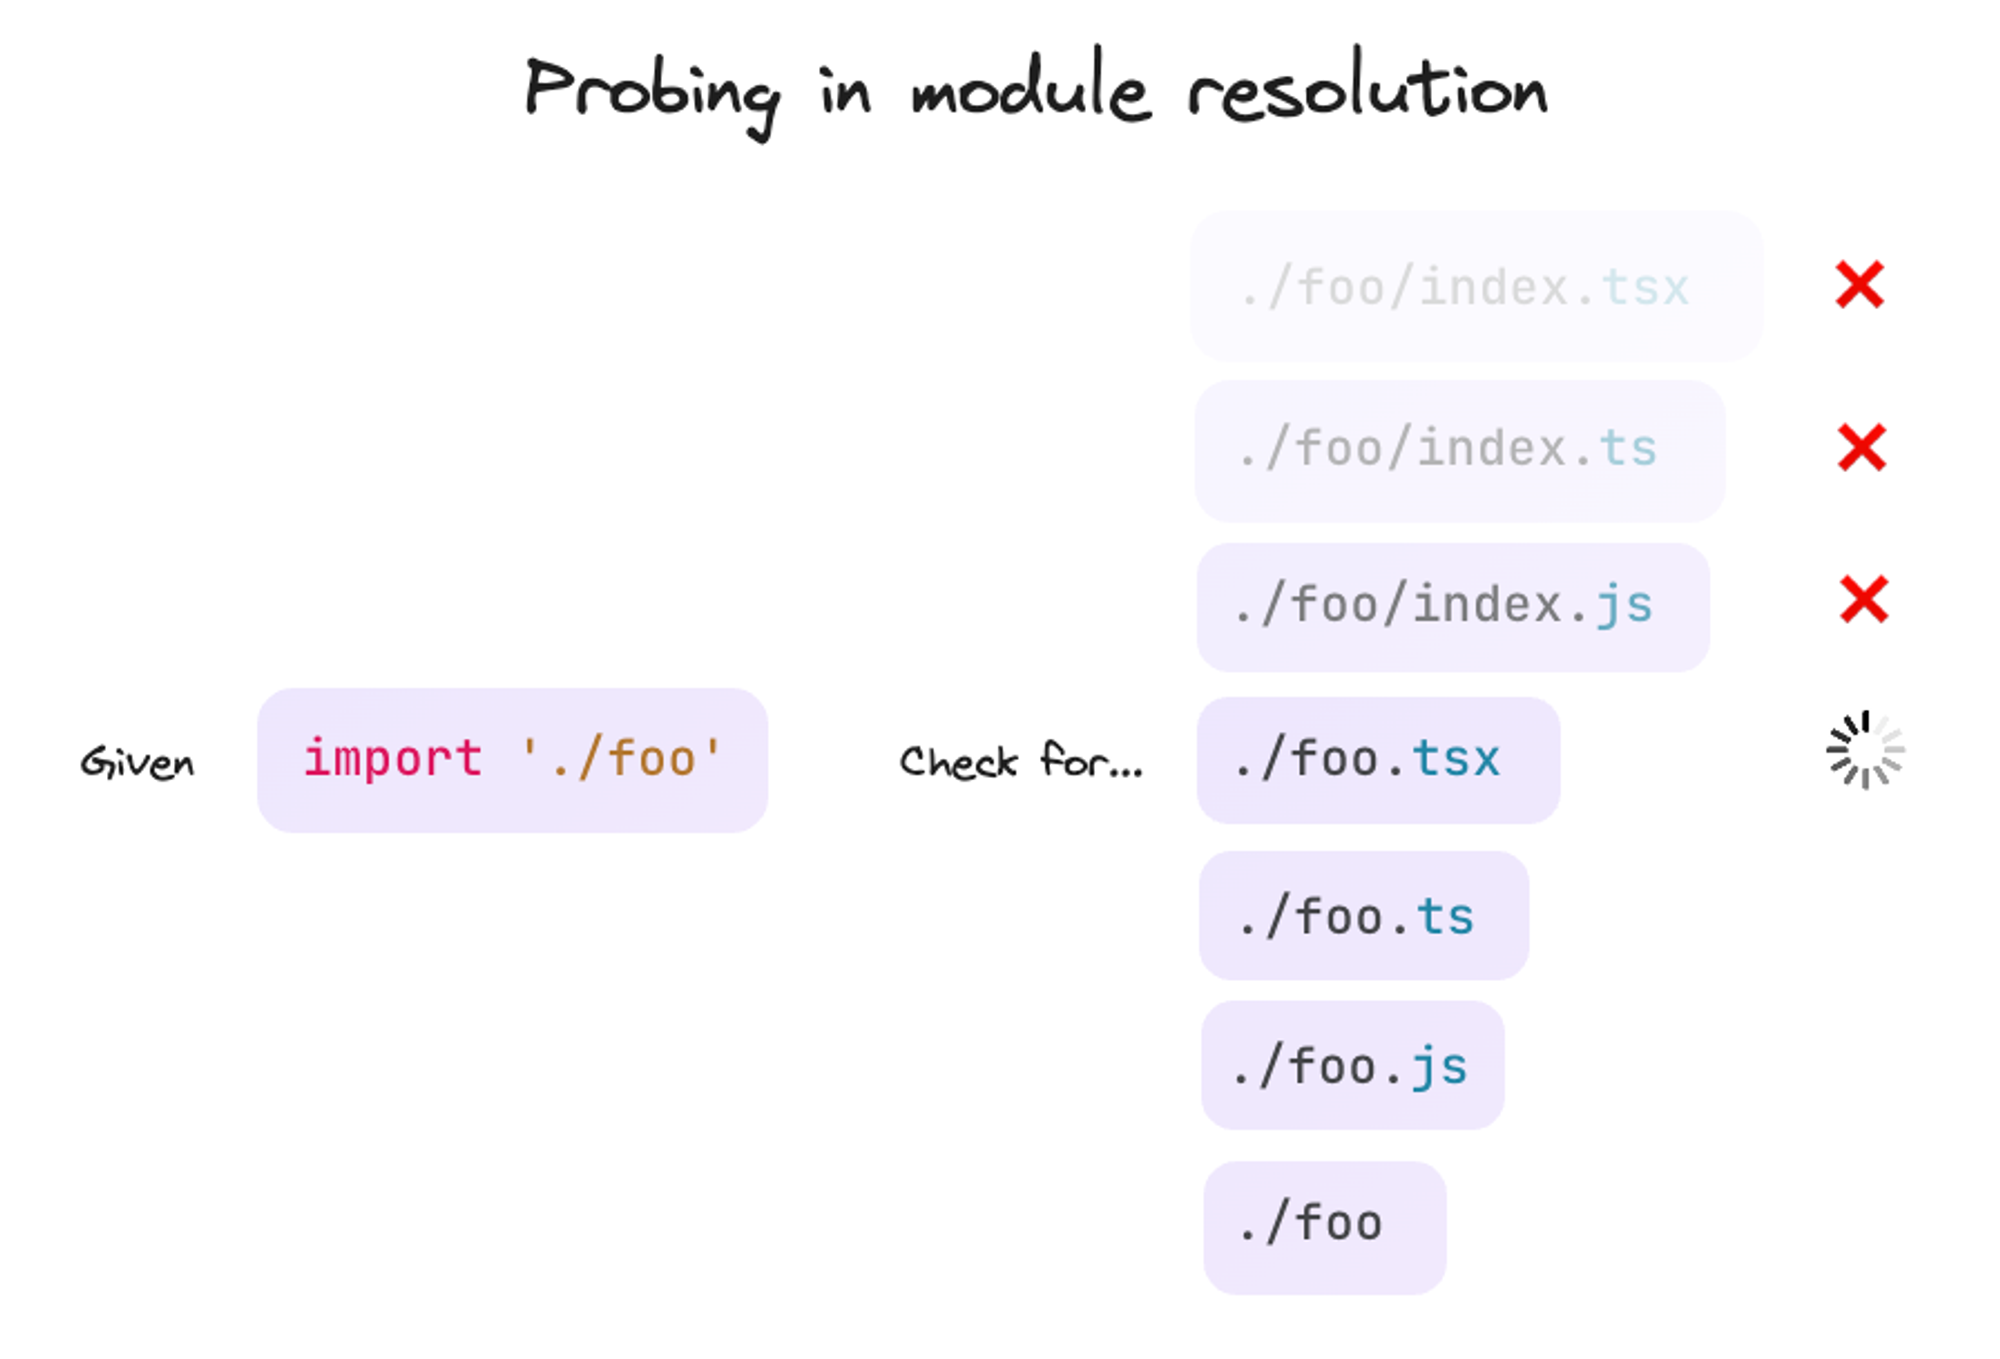 Probing in module resolution